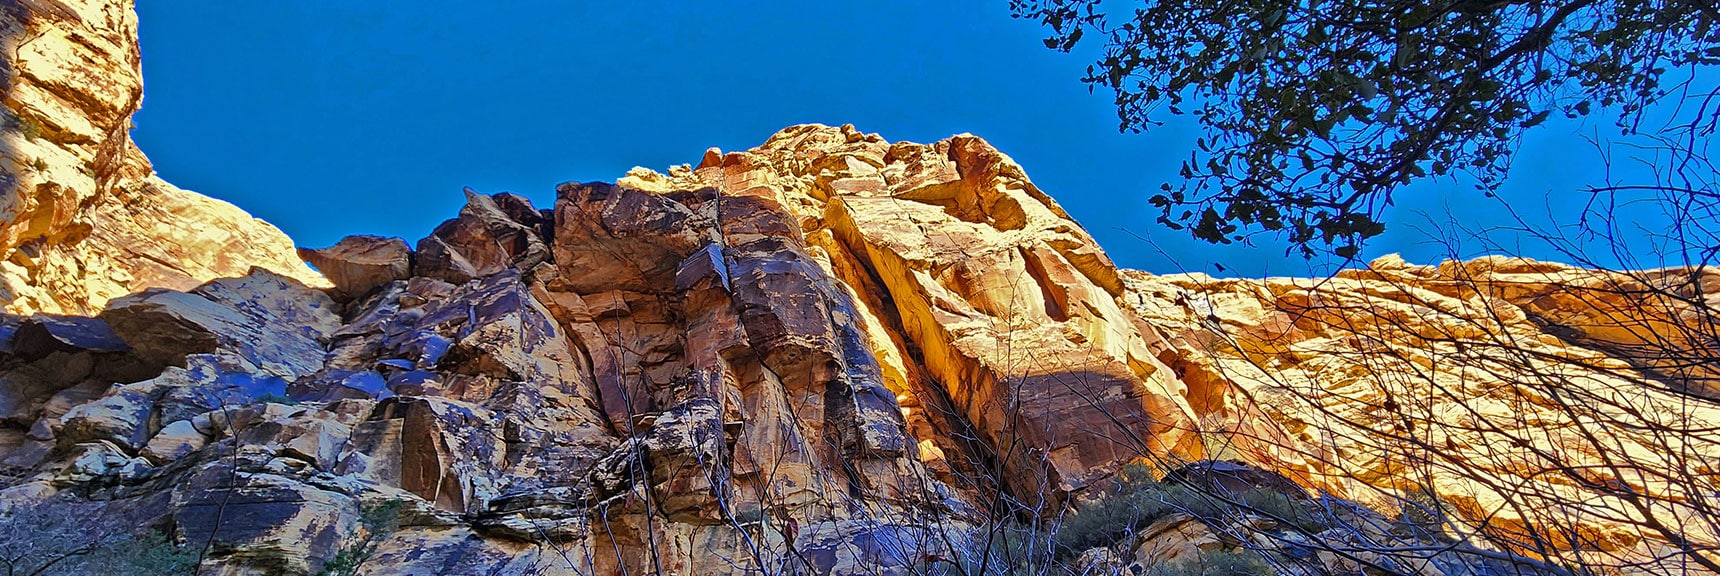 High Canyon Walls Form Rugged Sculptures | Ice Box Canyon | Red Rock Canyon NCA, Nevada | Las Vegas Area Trails | David Smith